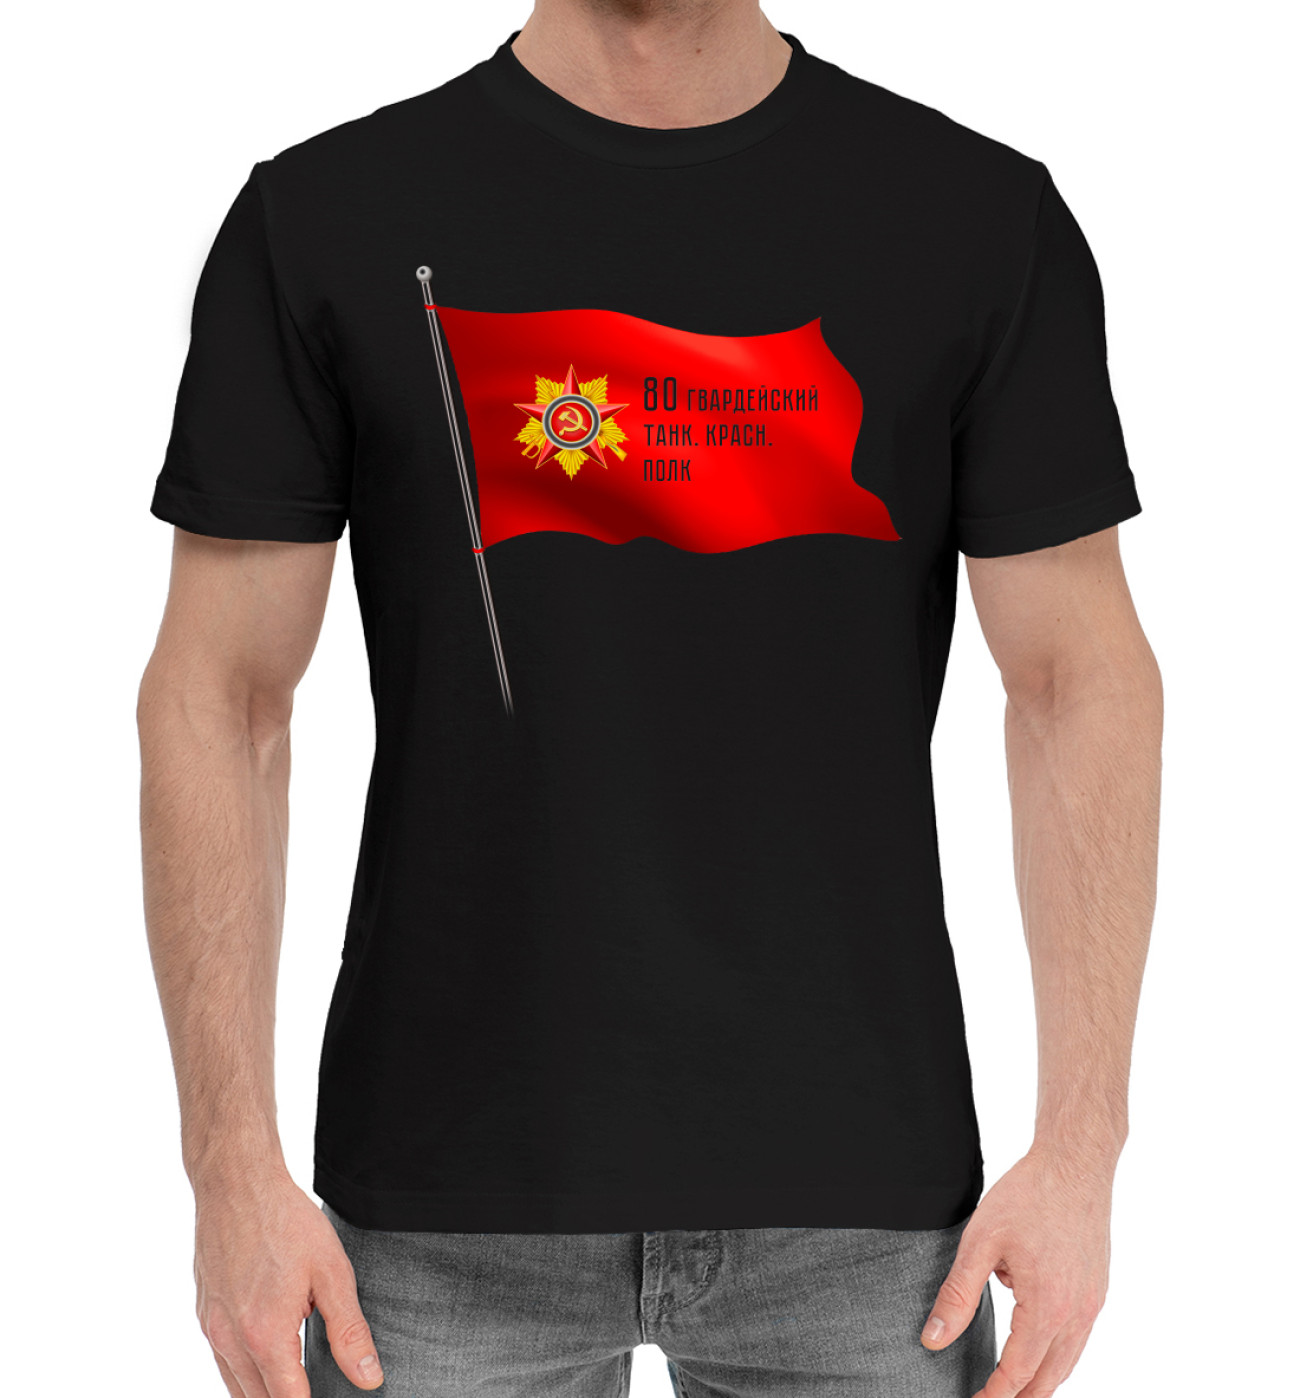 Мужская Хлопковая футболка 80 гвардейский танк. красн. полк, артикул: NNE-605833-hfu-2